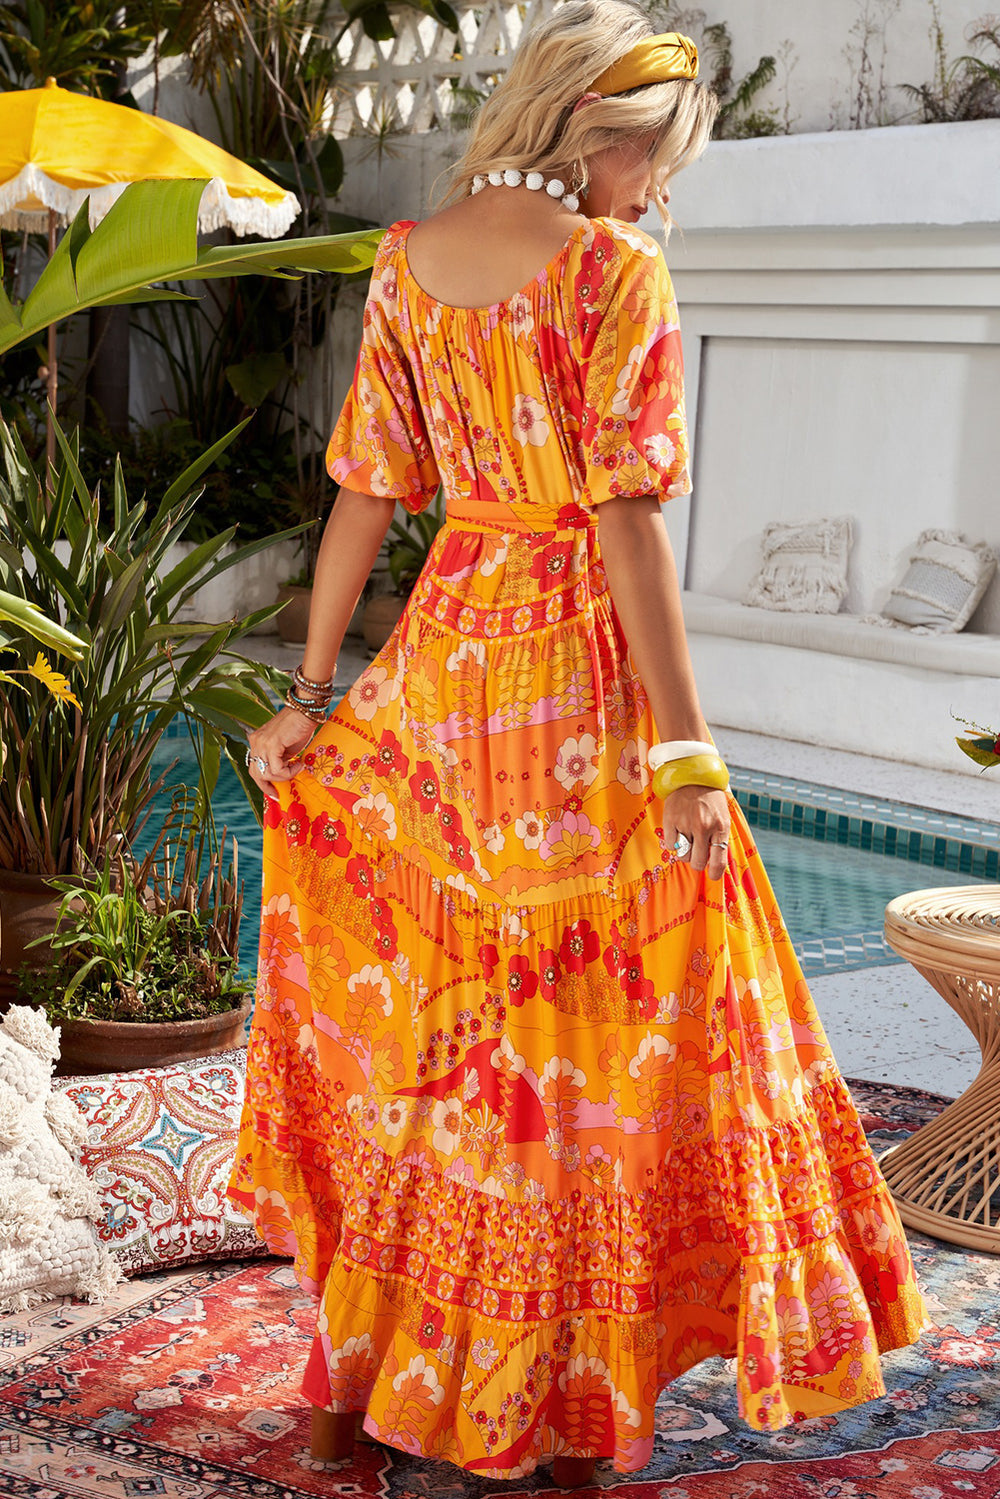 Chic Orange Boho Empire Waist Floral Long Dress